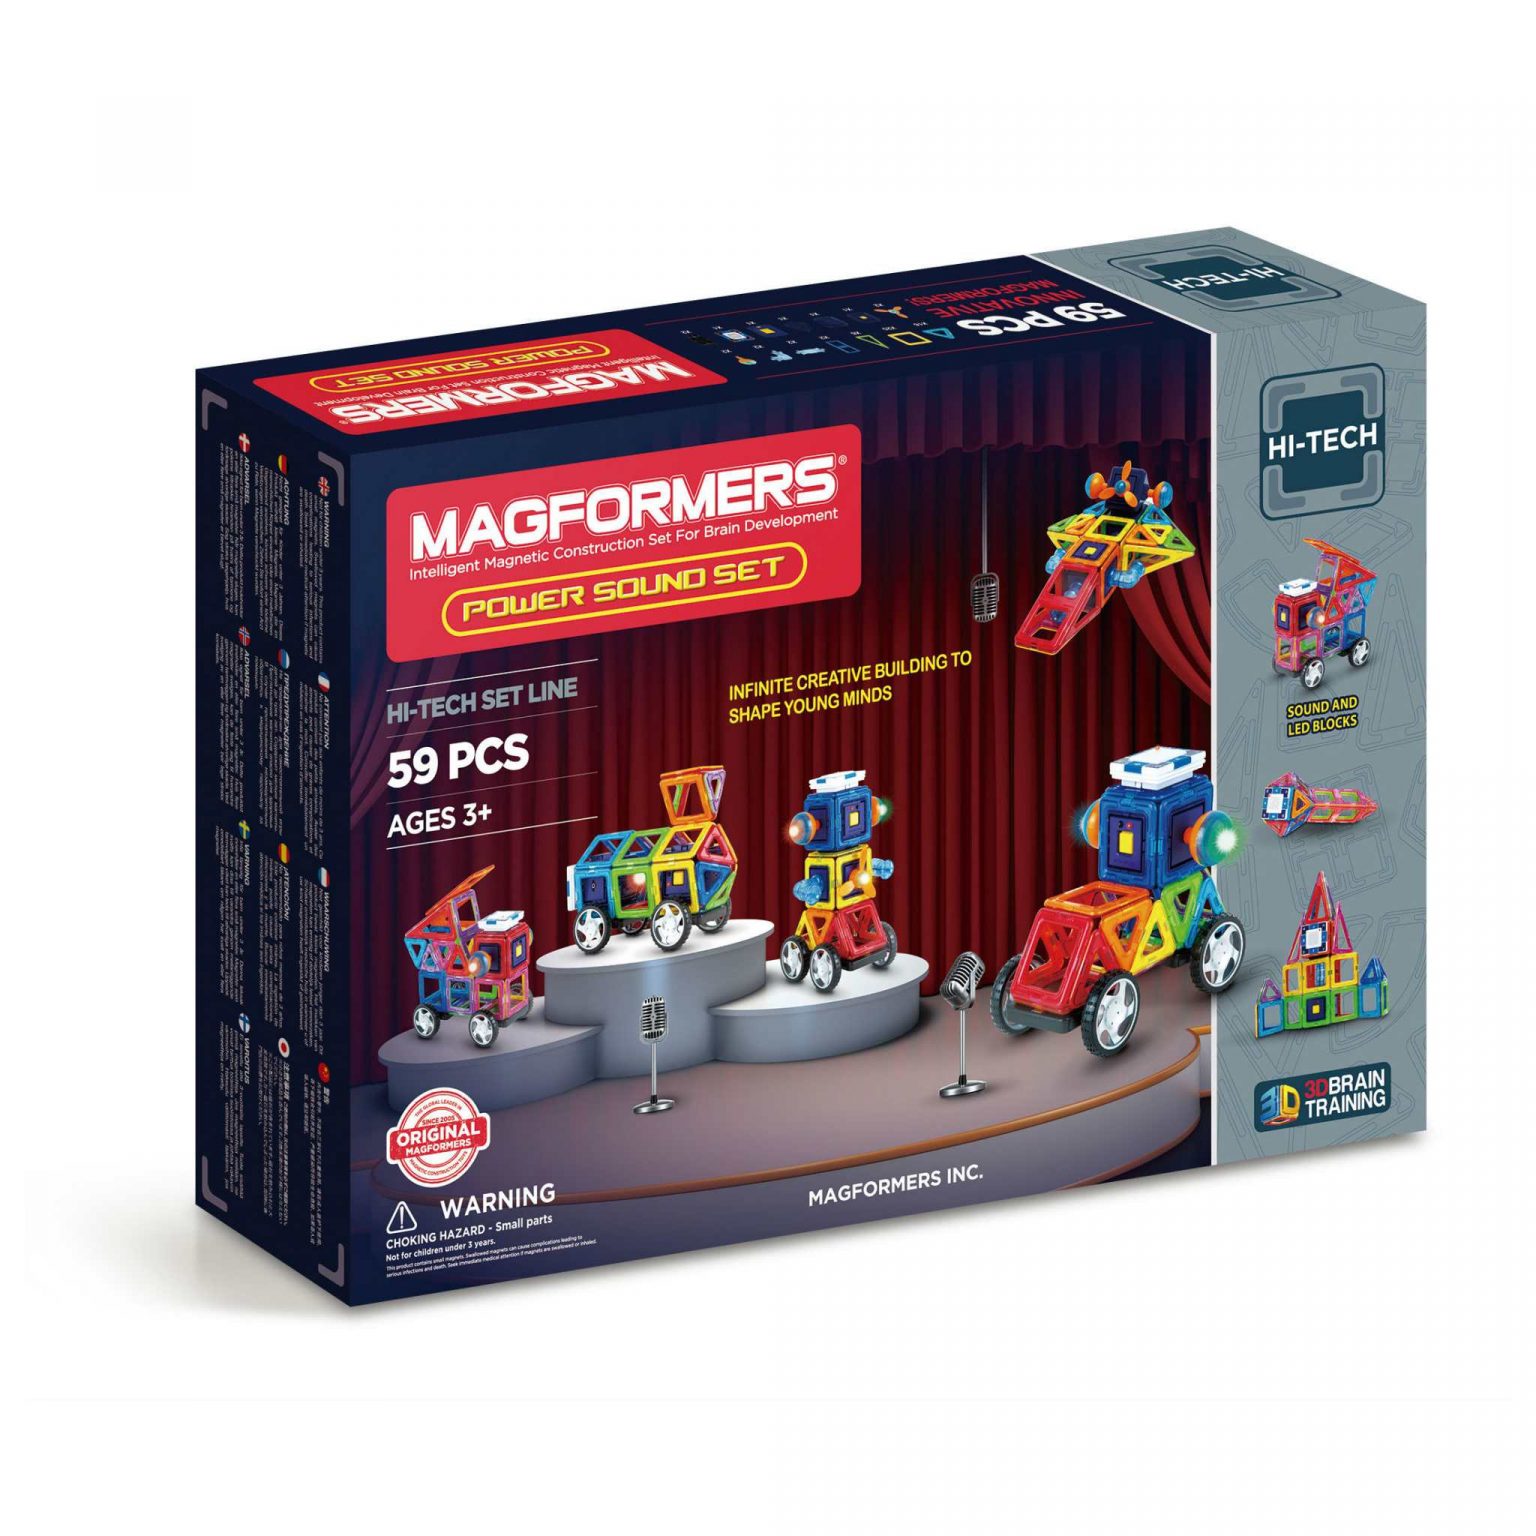 Magformers Hi-Tech – Power sound set